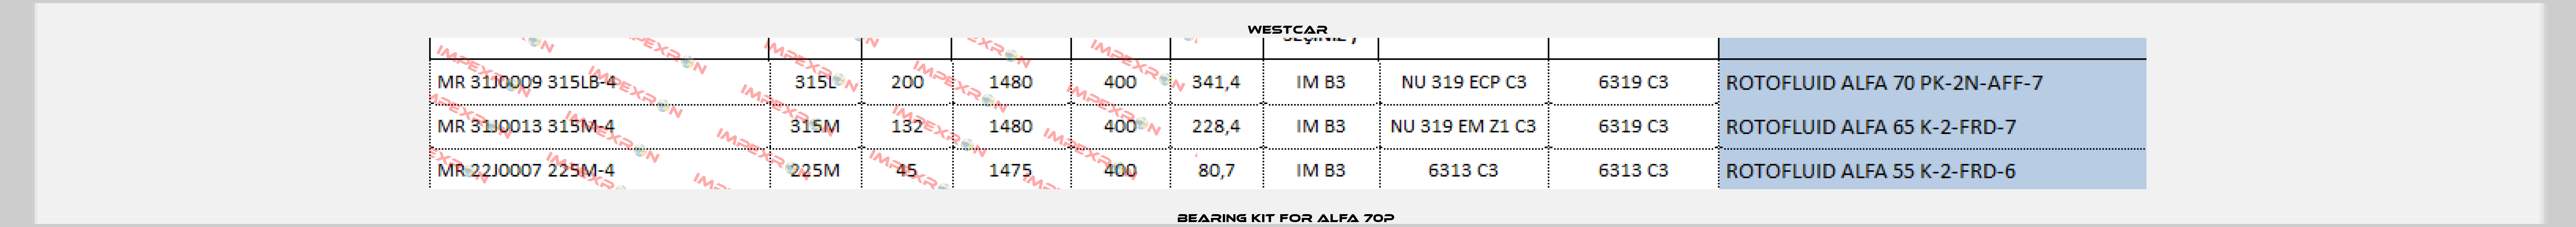 Bearing kit for Alfa 70P  Westcar